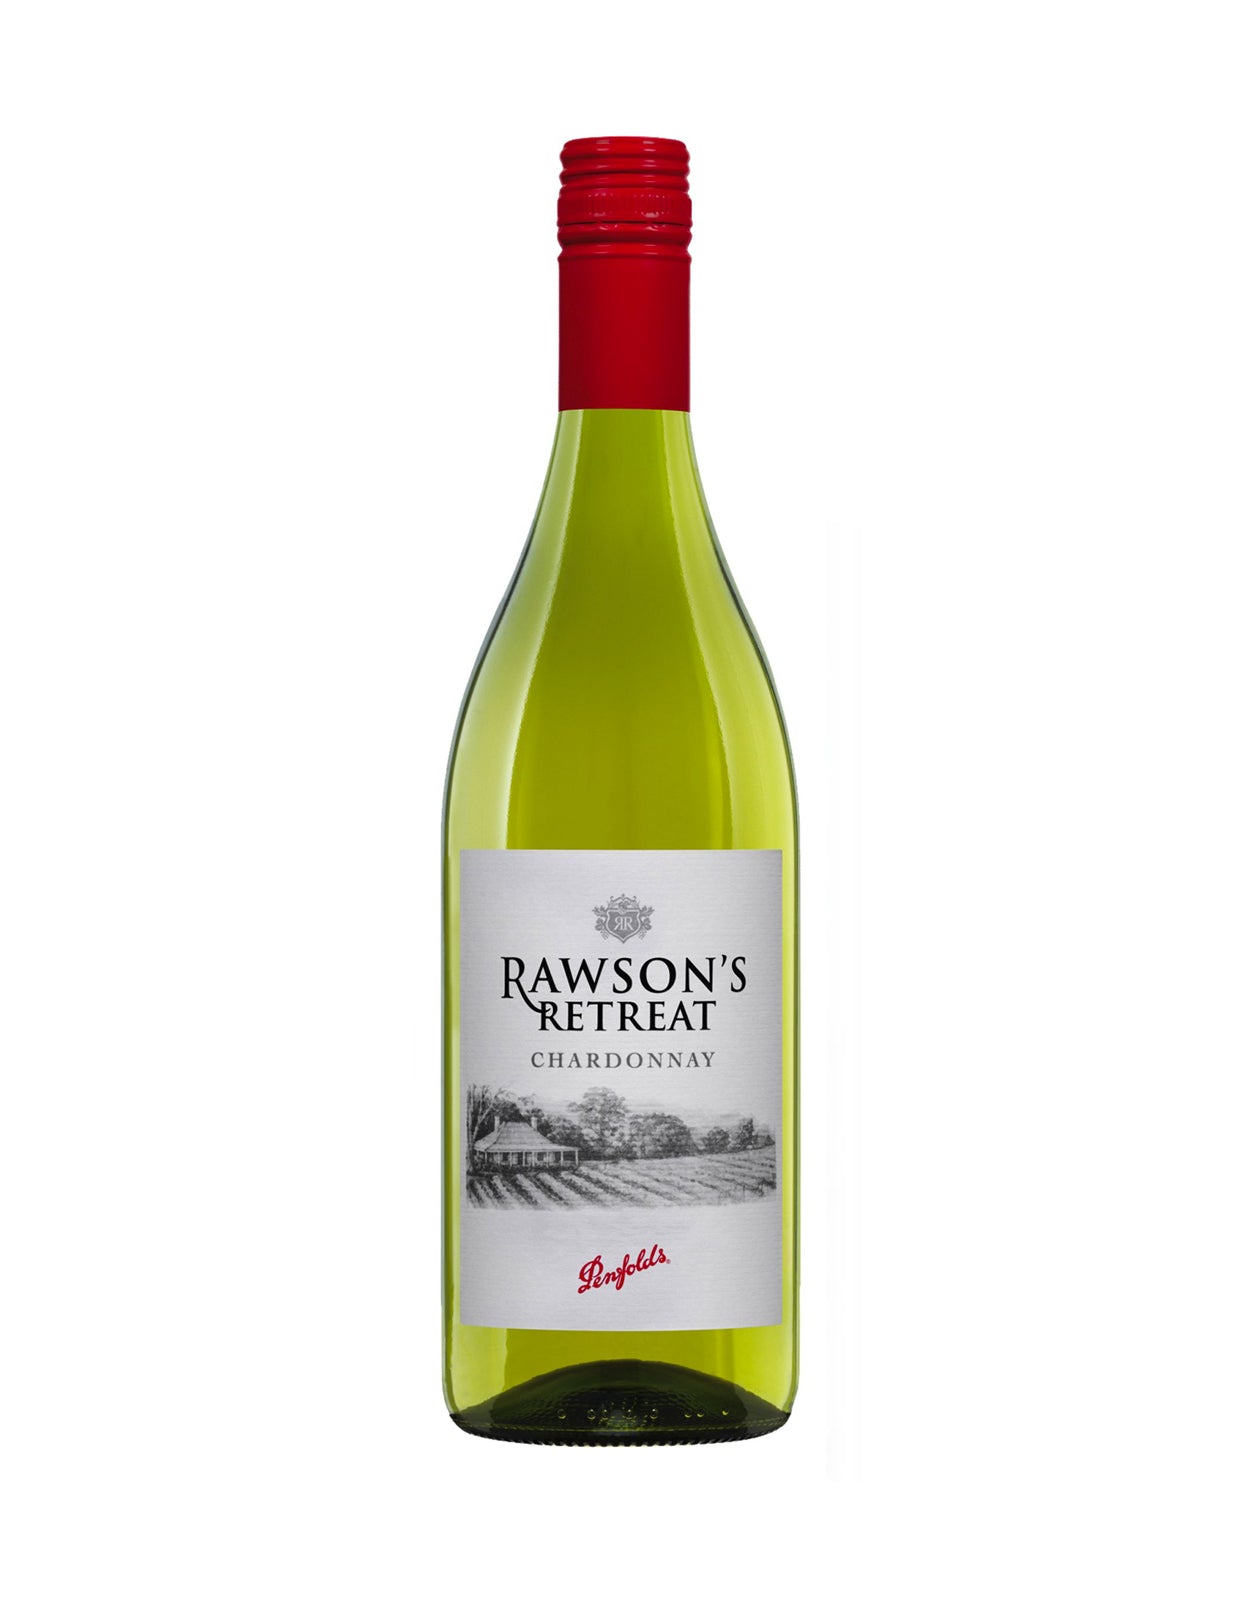 Penfolds Chardonnay Rawson's Retreat